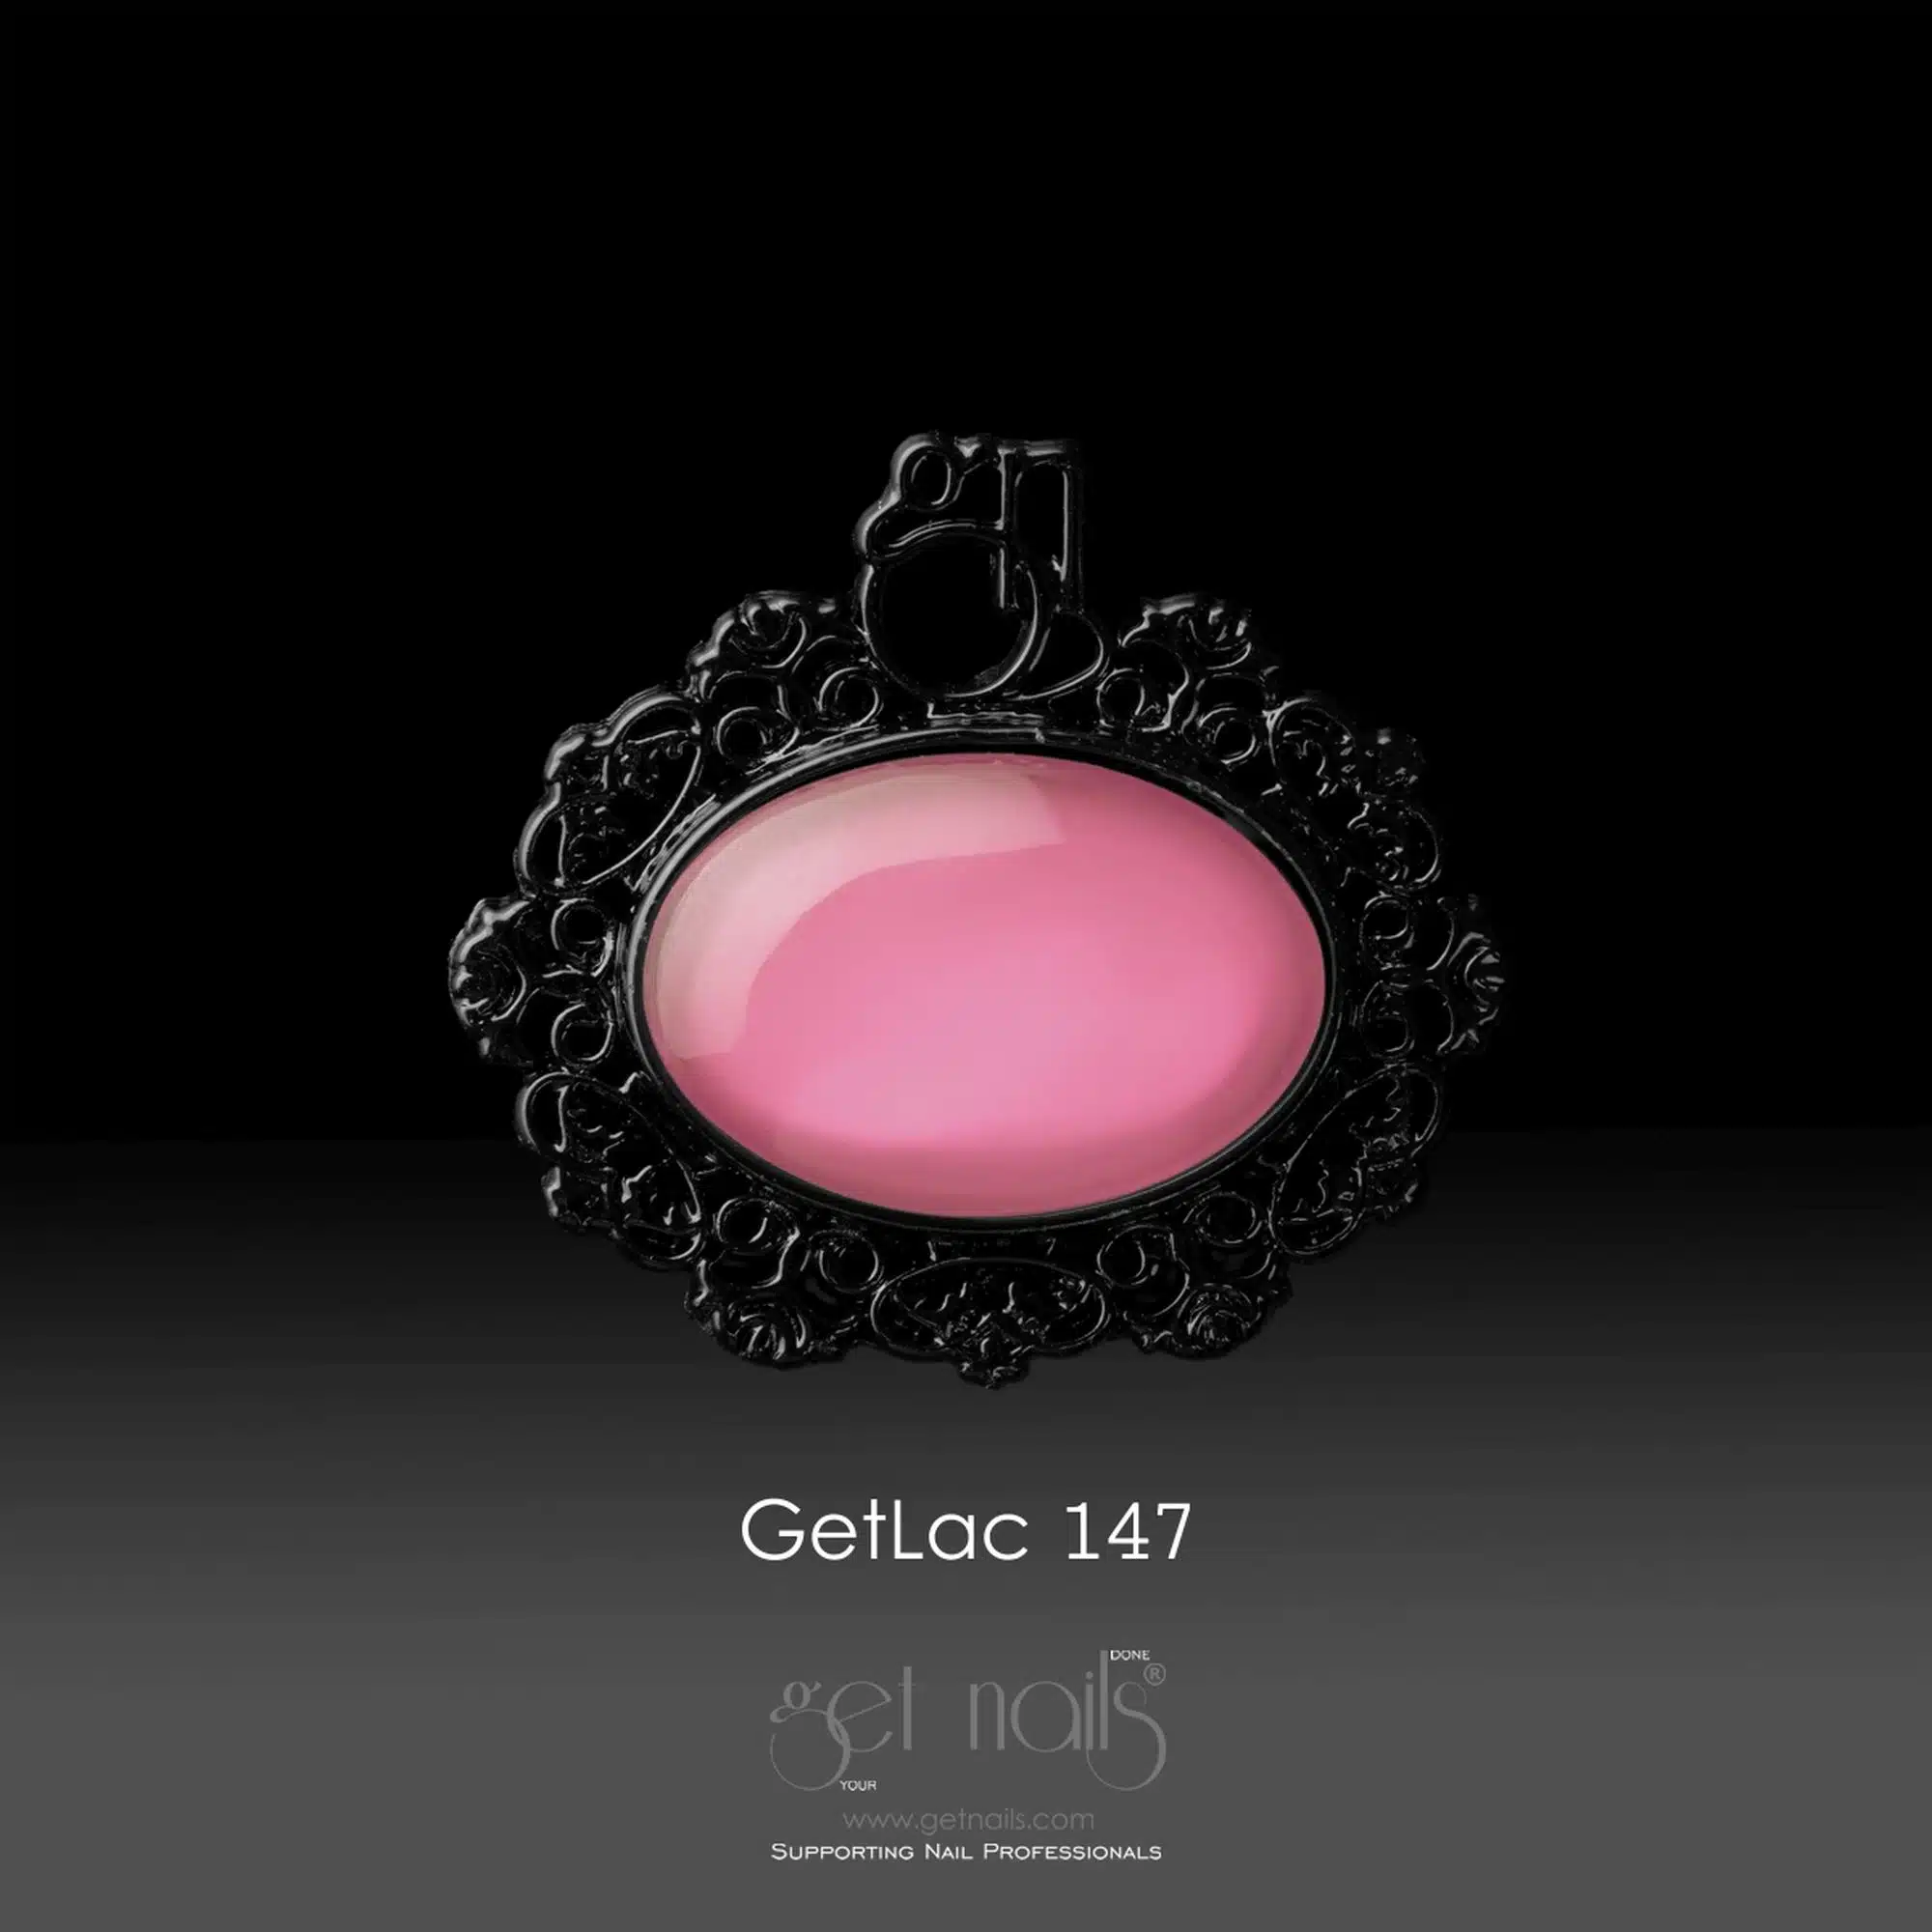 Get Nails Austria - GetLac 147 15g